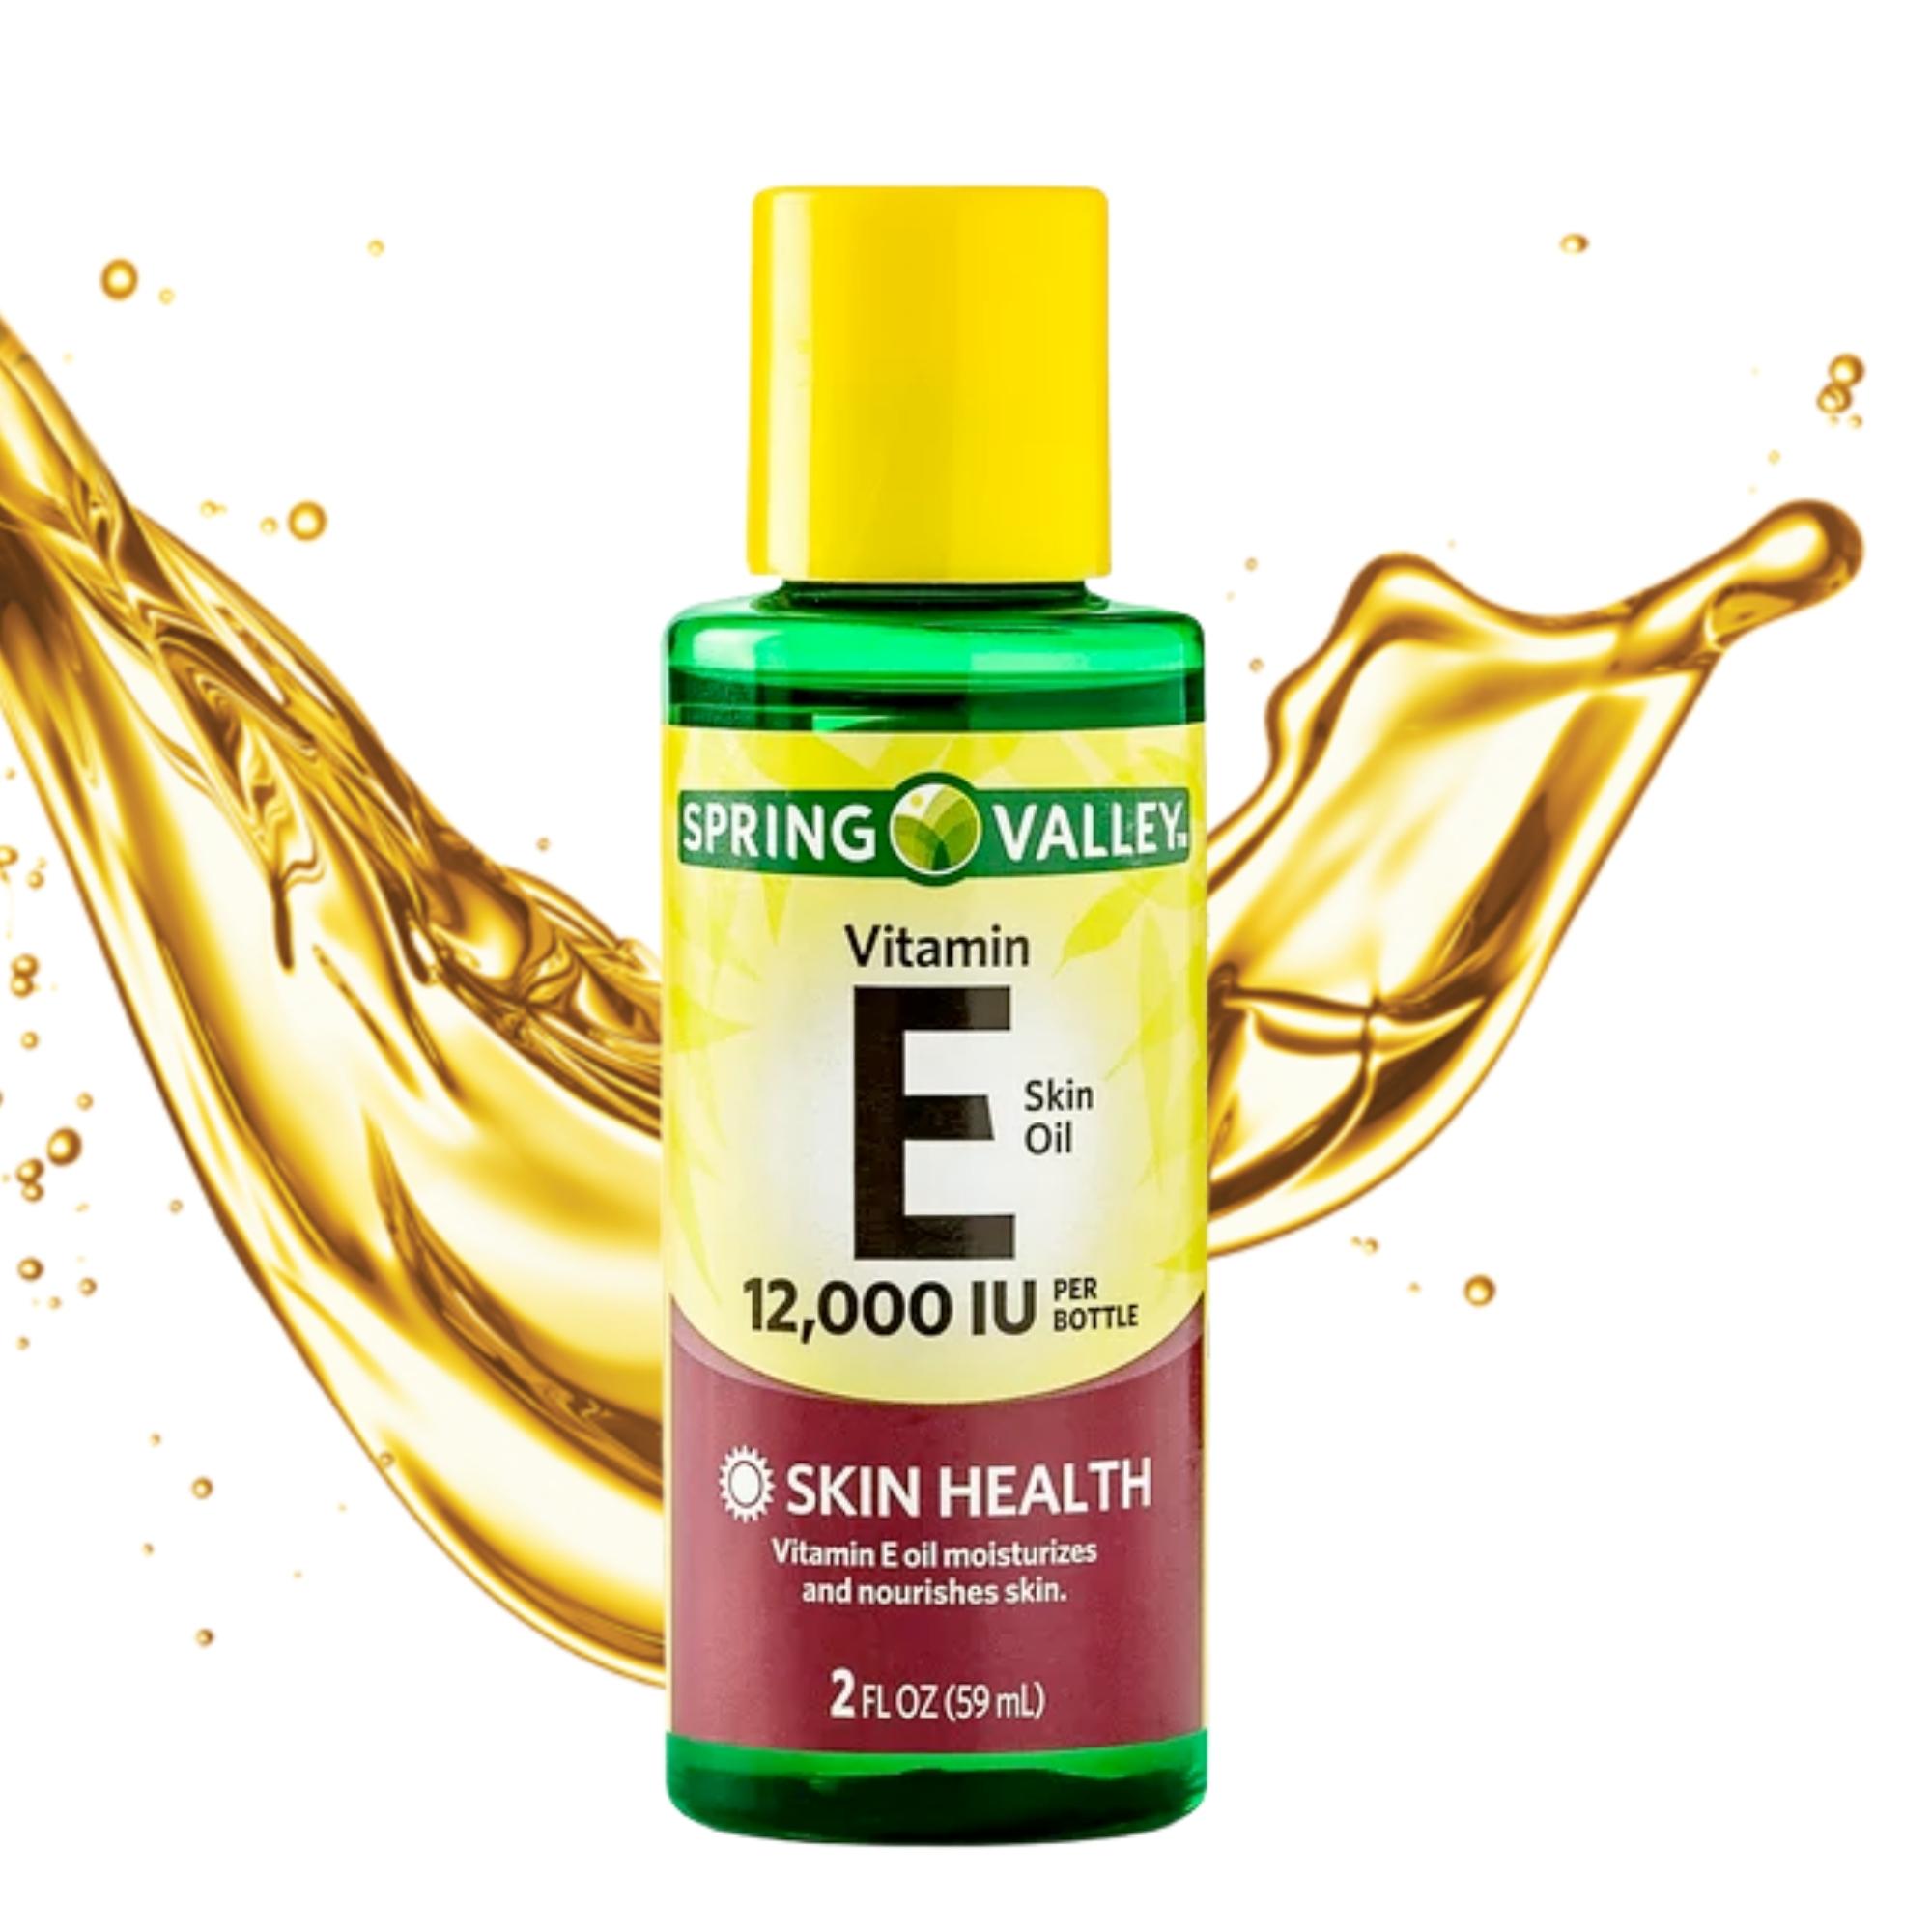 Spring Valley Vitamin E Oil with Keratin for Skin Health, 12000 IU, 2 fl oz - image 1 of 10